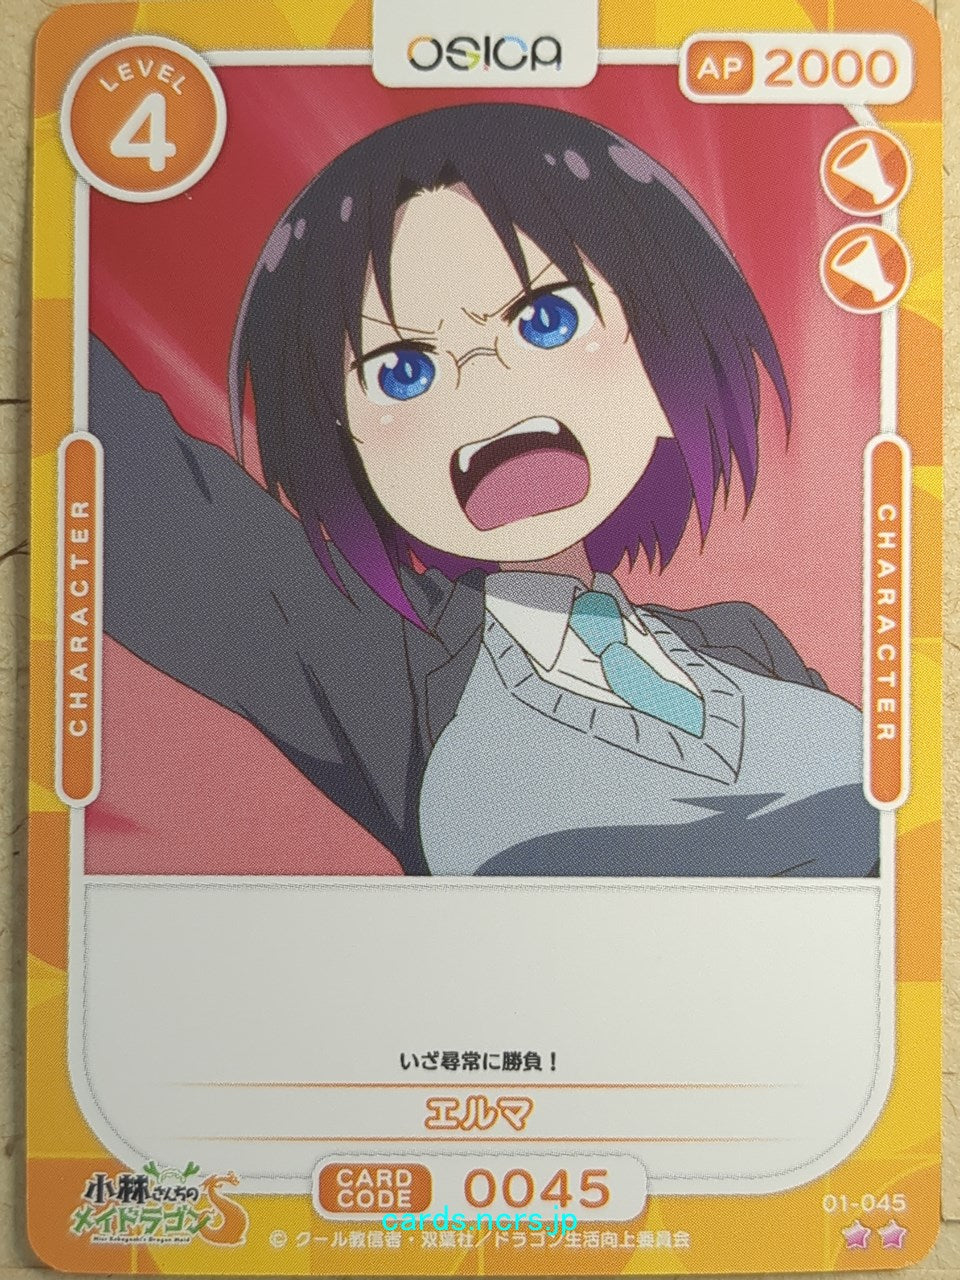 OSICA Miss Kobayashi's Dragon Maid -Elma-   Trading Card OS/KOB-01-045